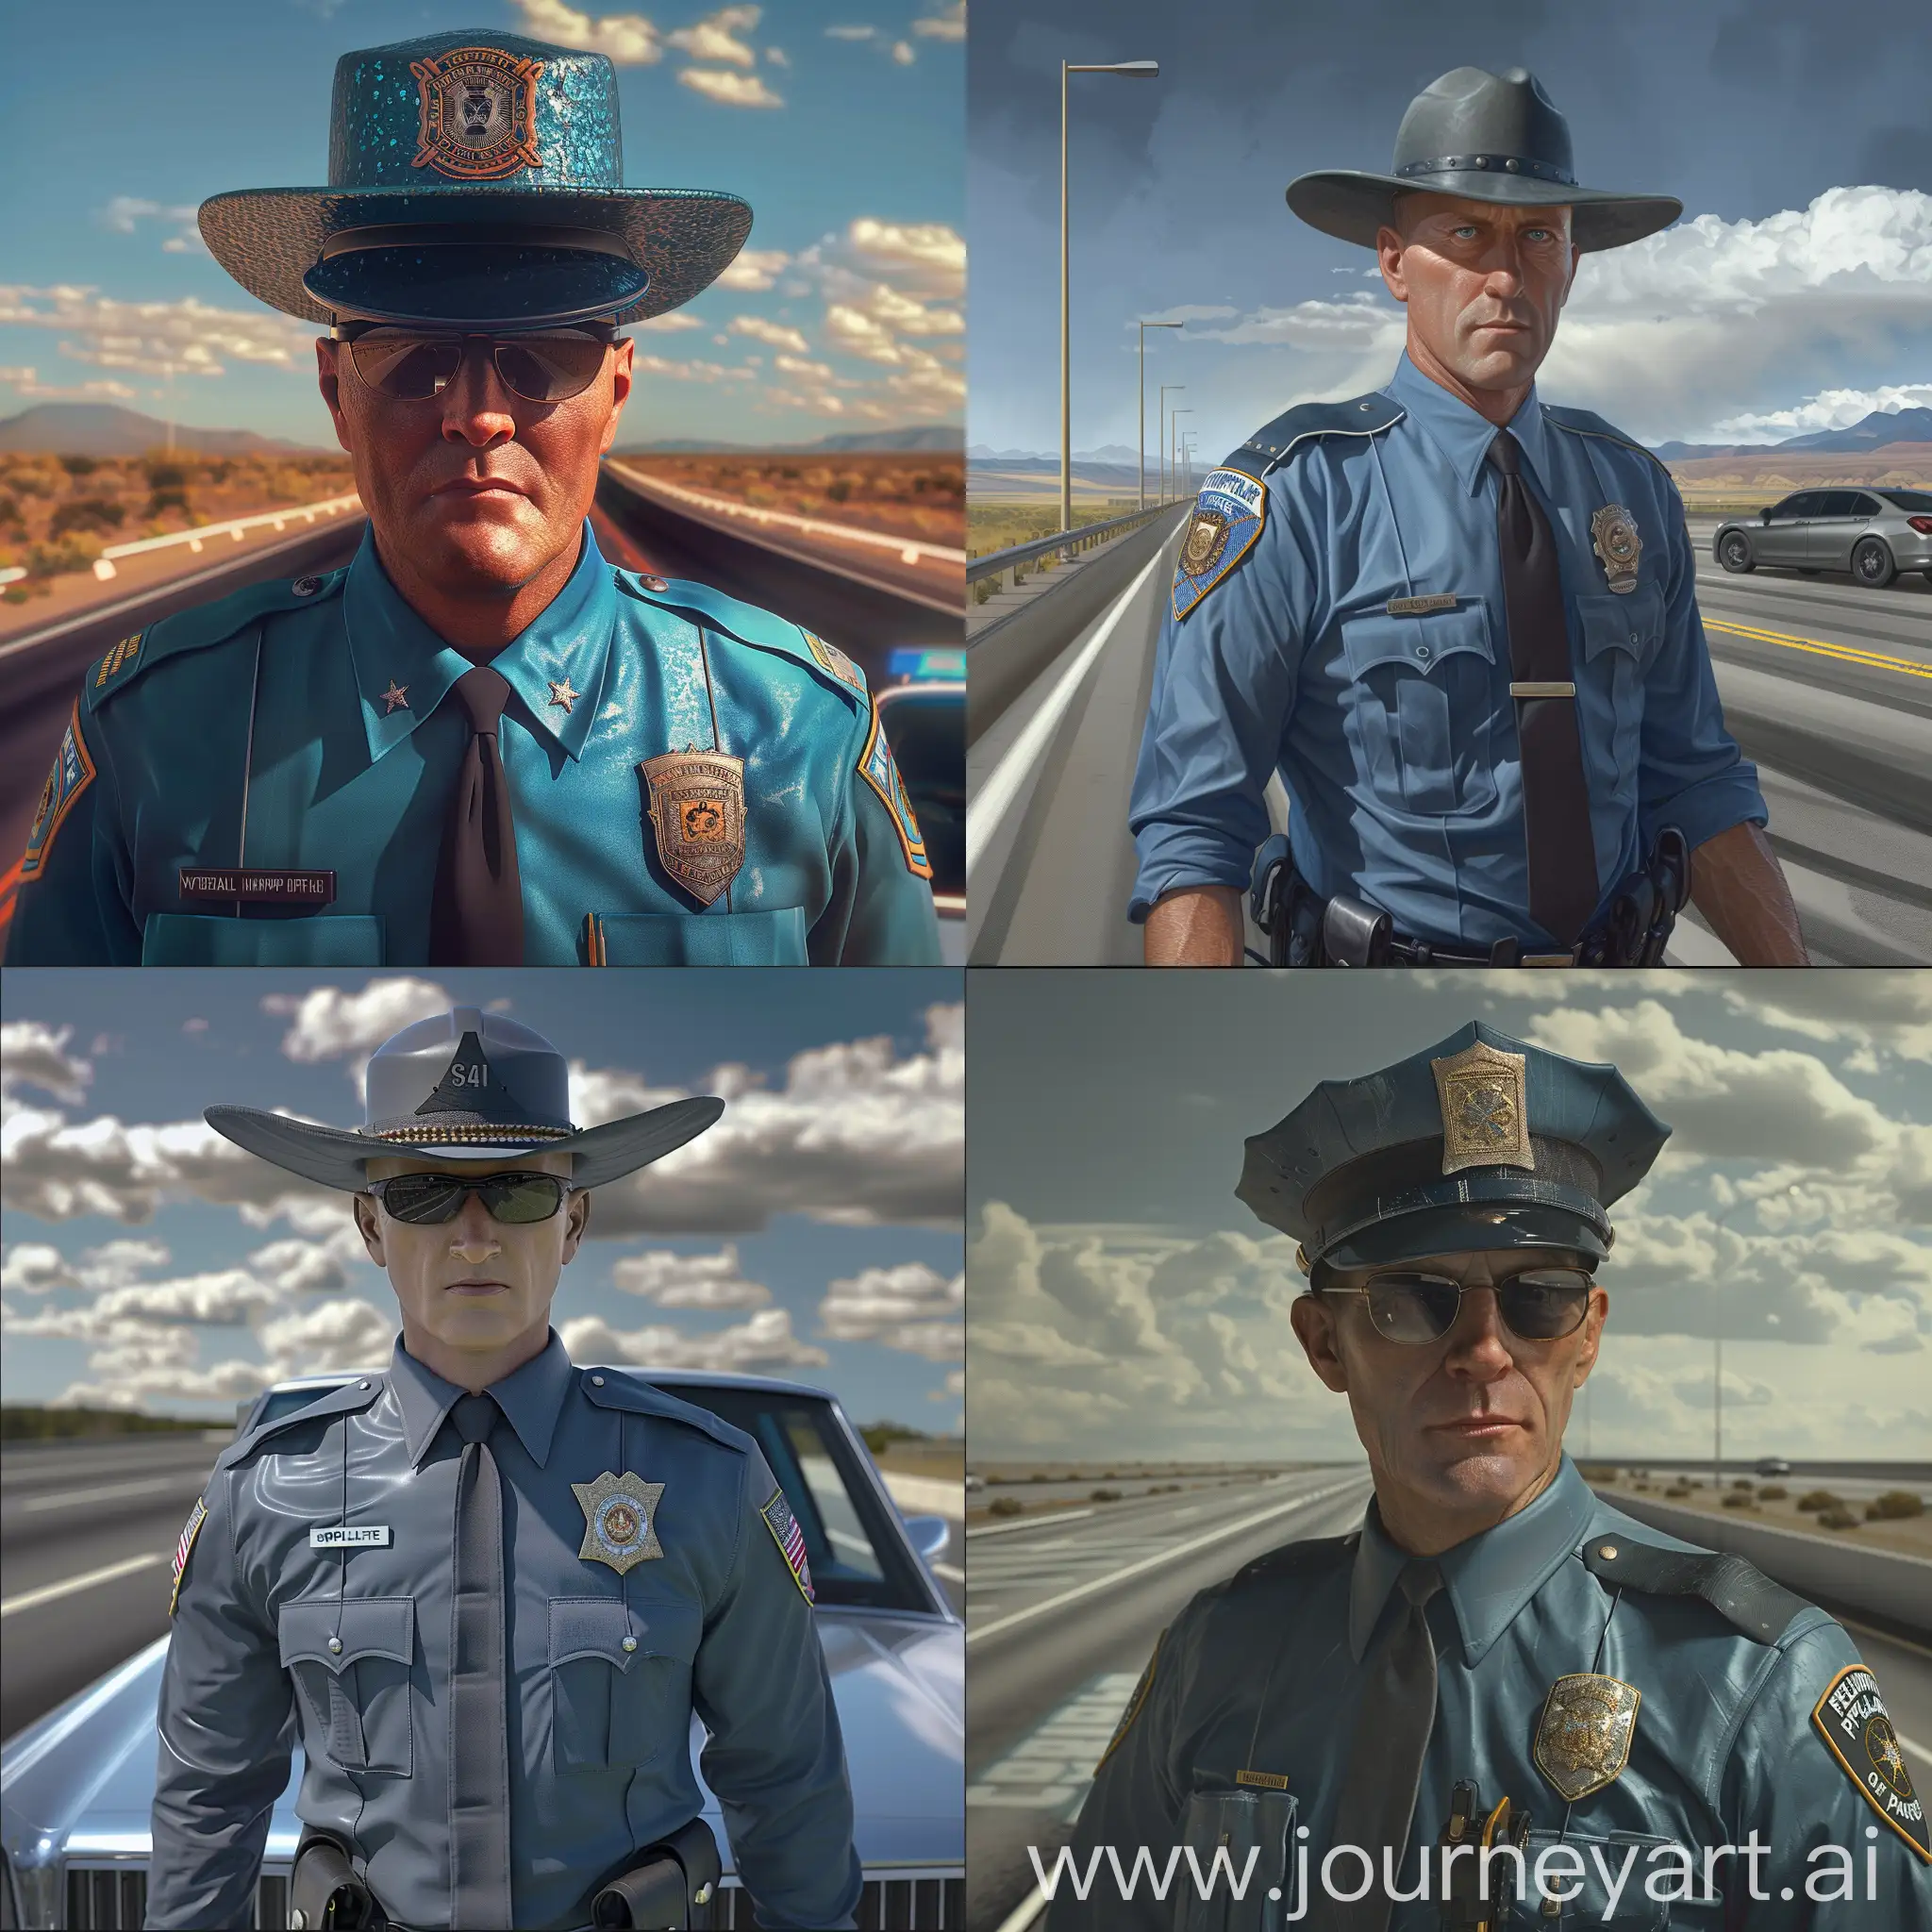 Cinematic-Federal-Highway-Patrol-Officer-on-Duty